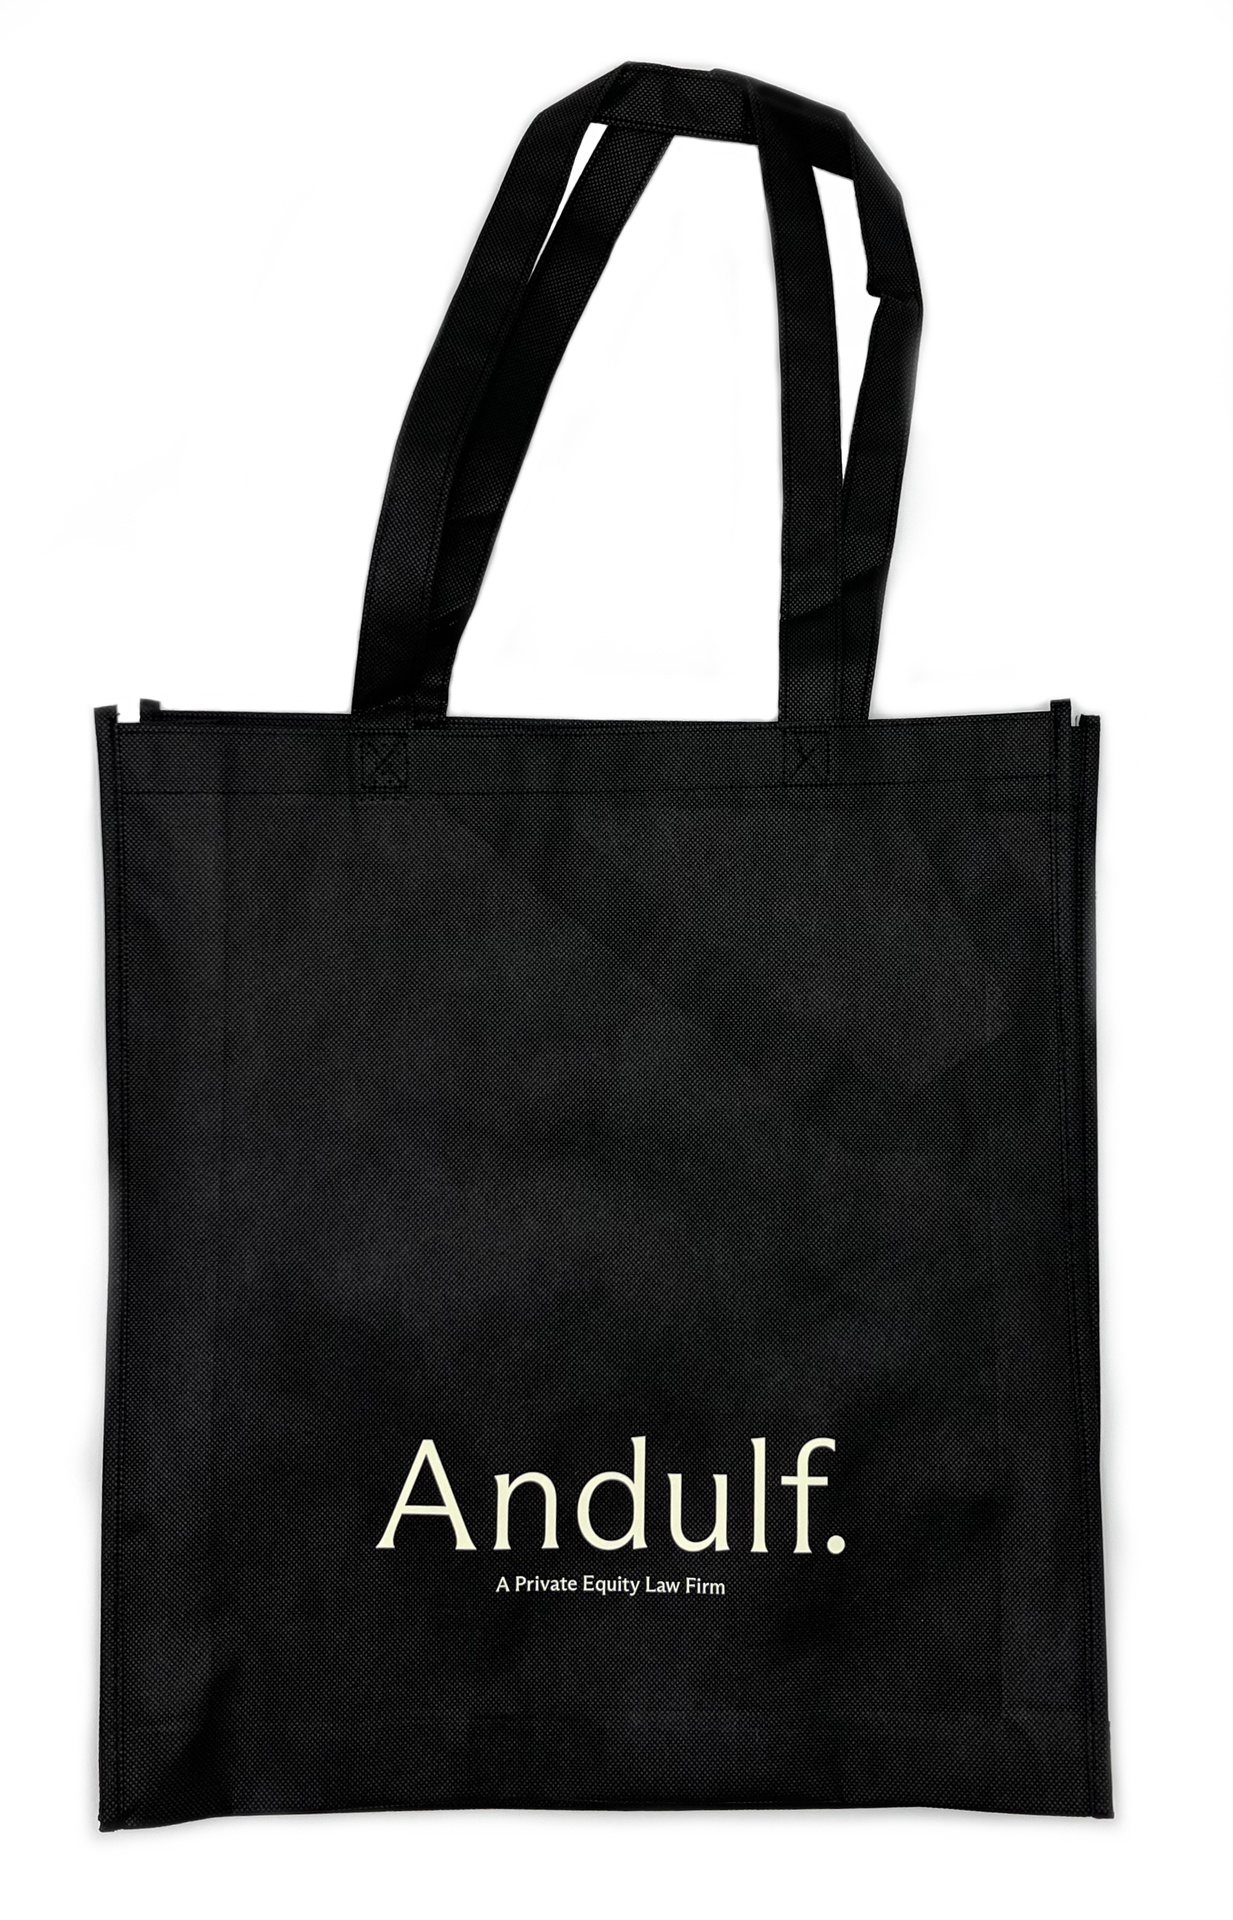 [EEAND2005] Tygpåse svart med Andulf logo 50st/fp